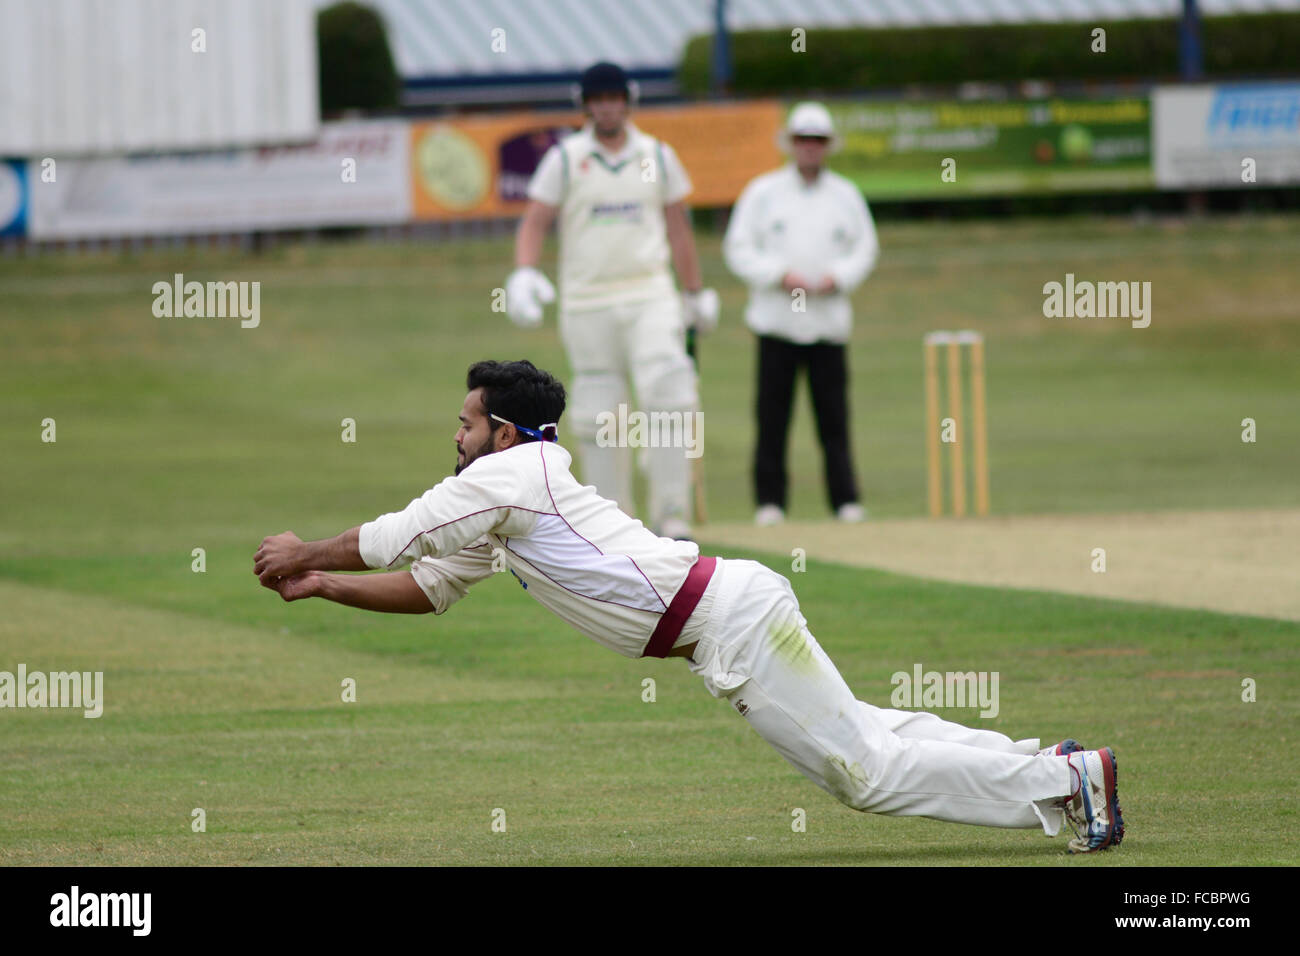 Yorkshire cricketer Azeem Rafiq catching a ball. Stock Photo